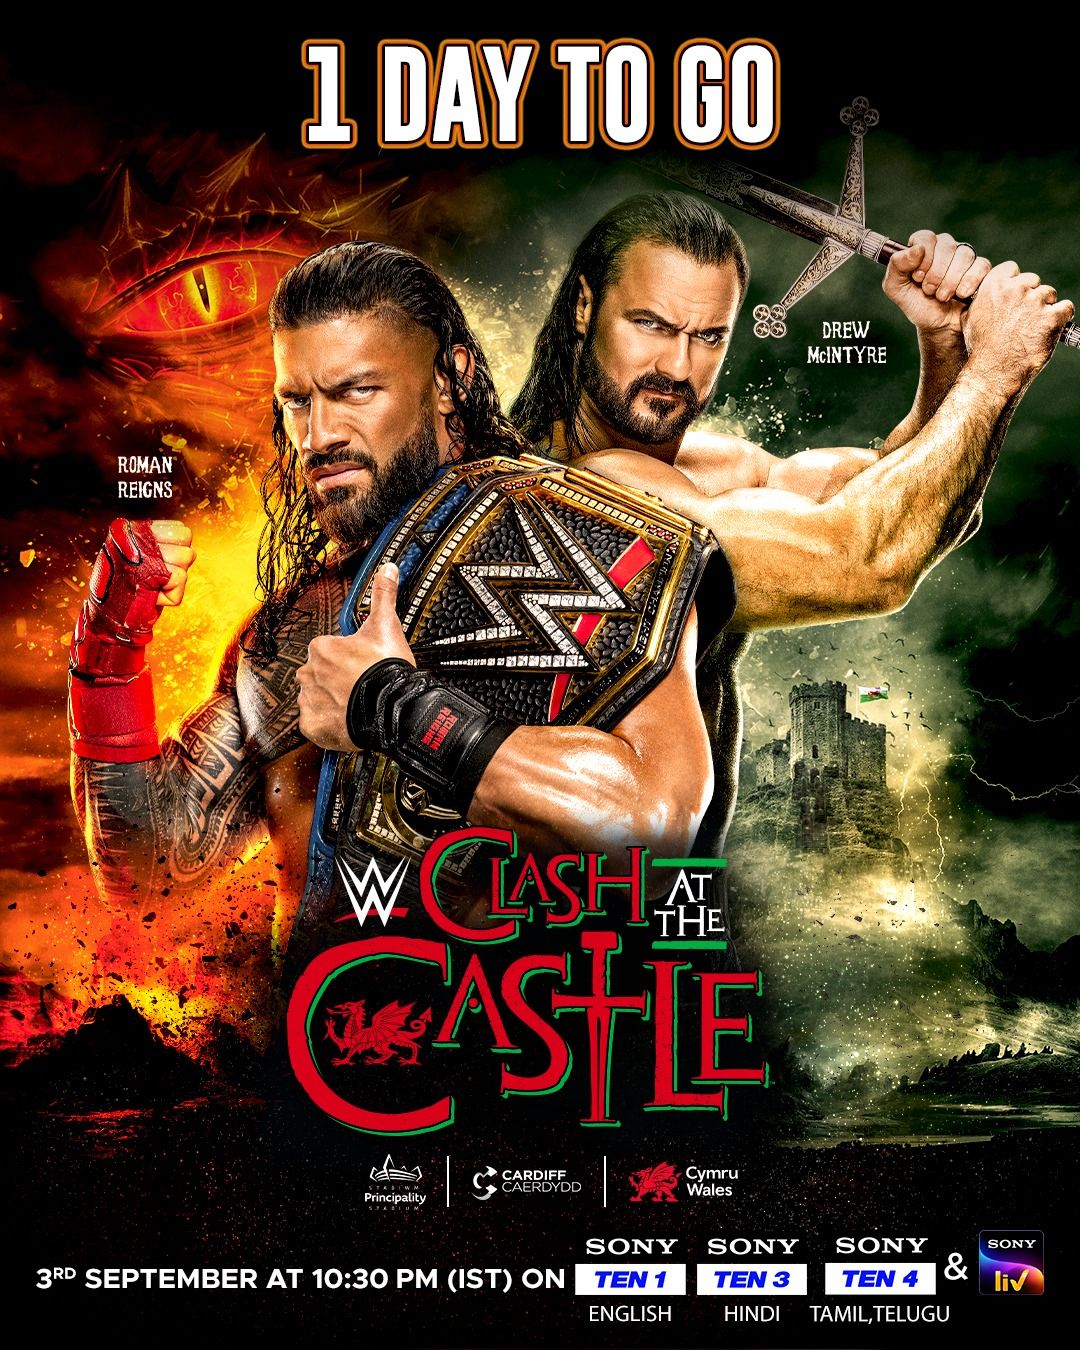 Roman Reigns Vs Drew McIntyre WWE Poster